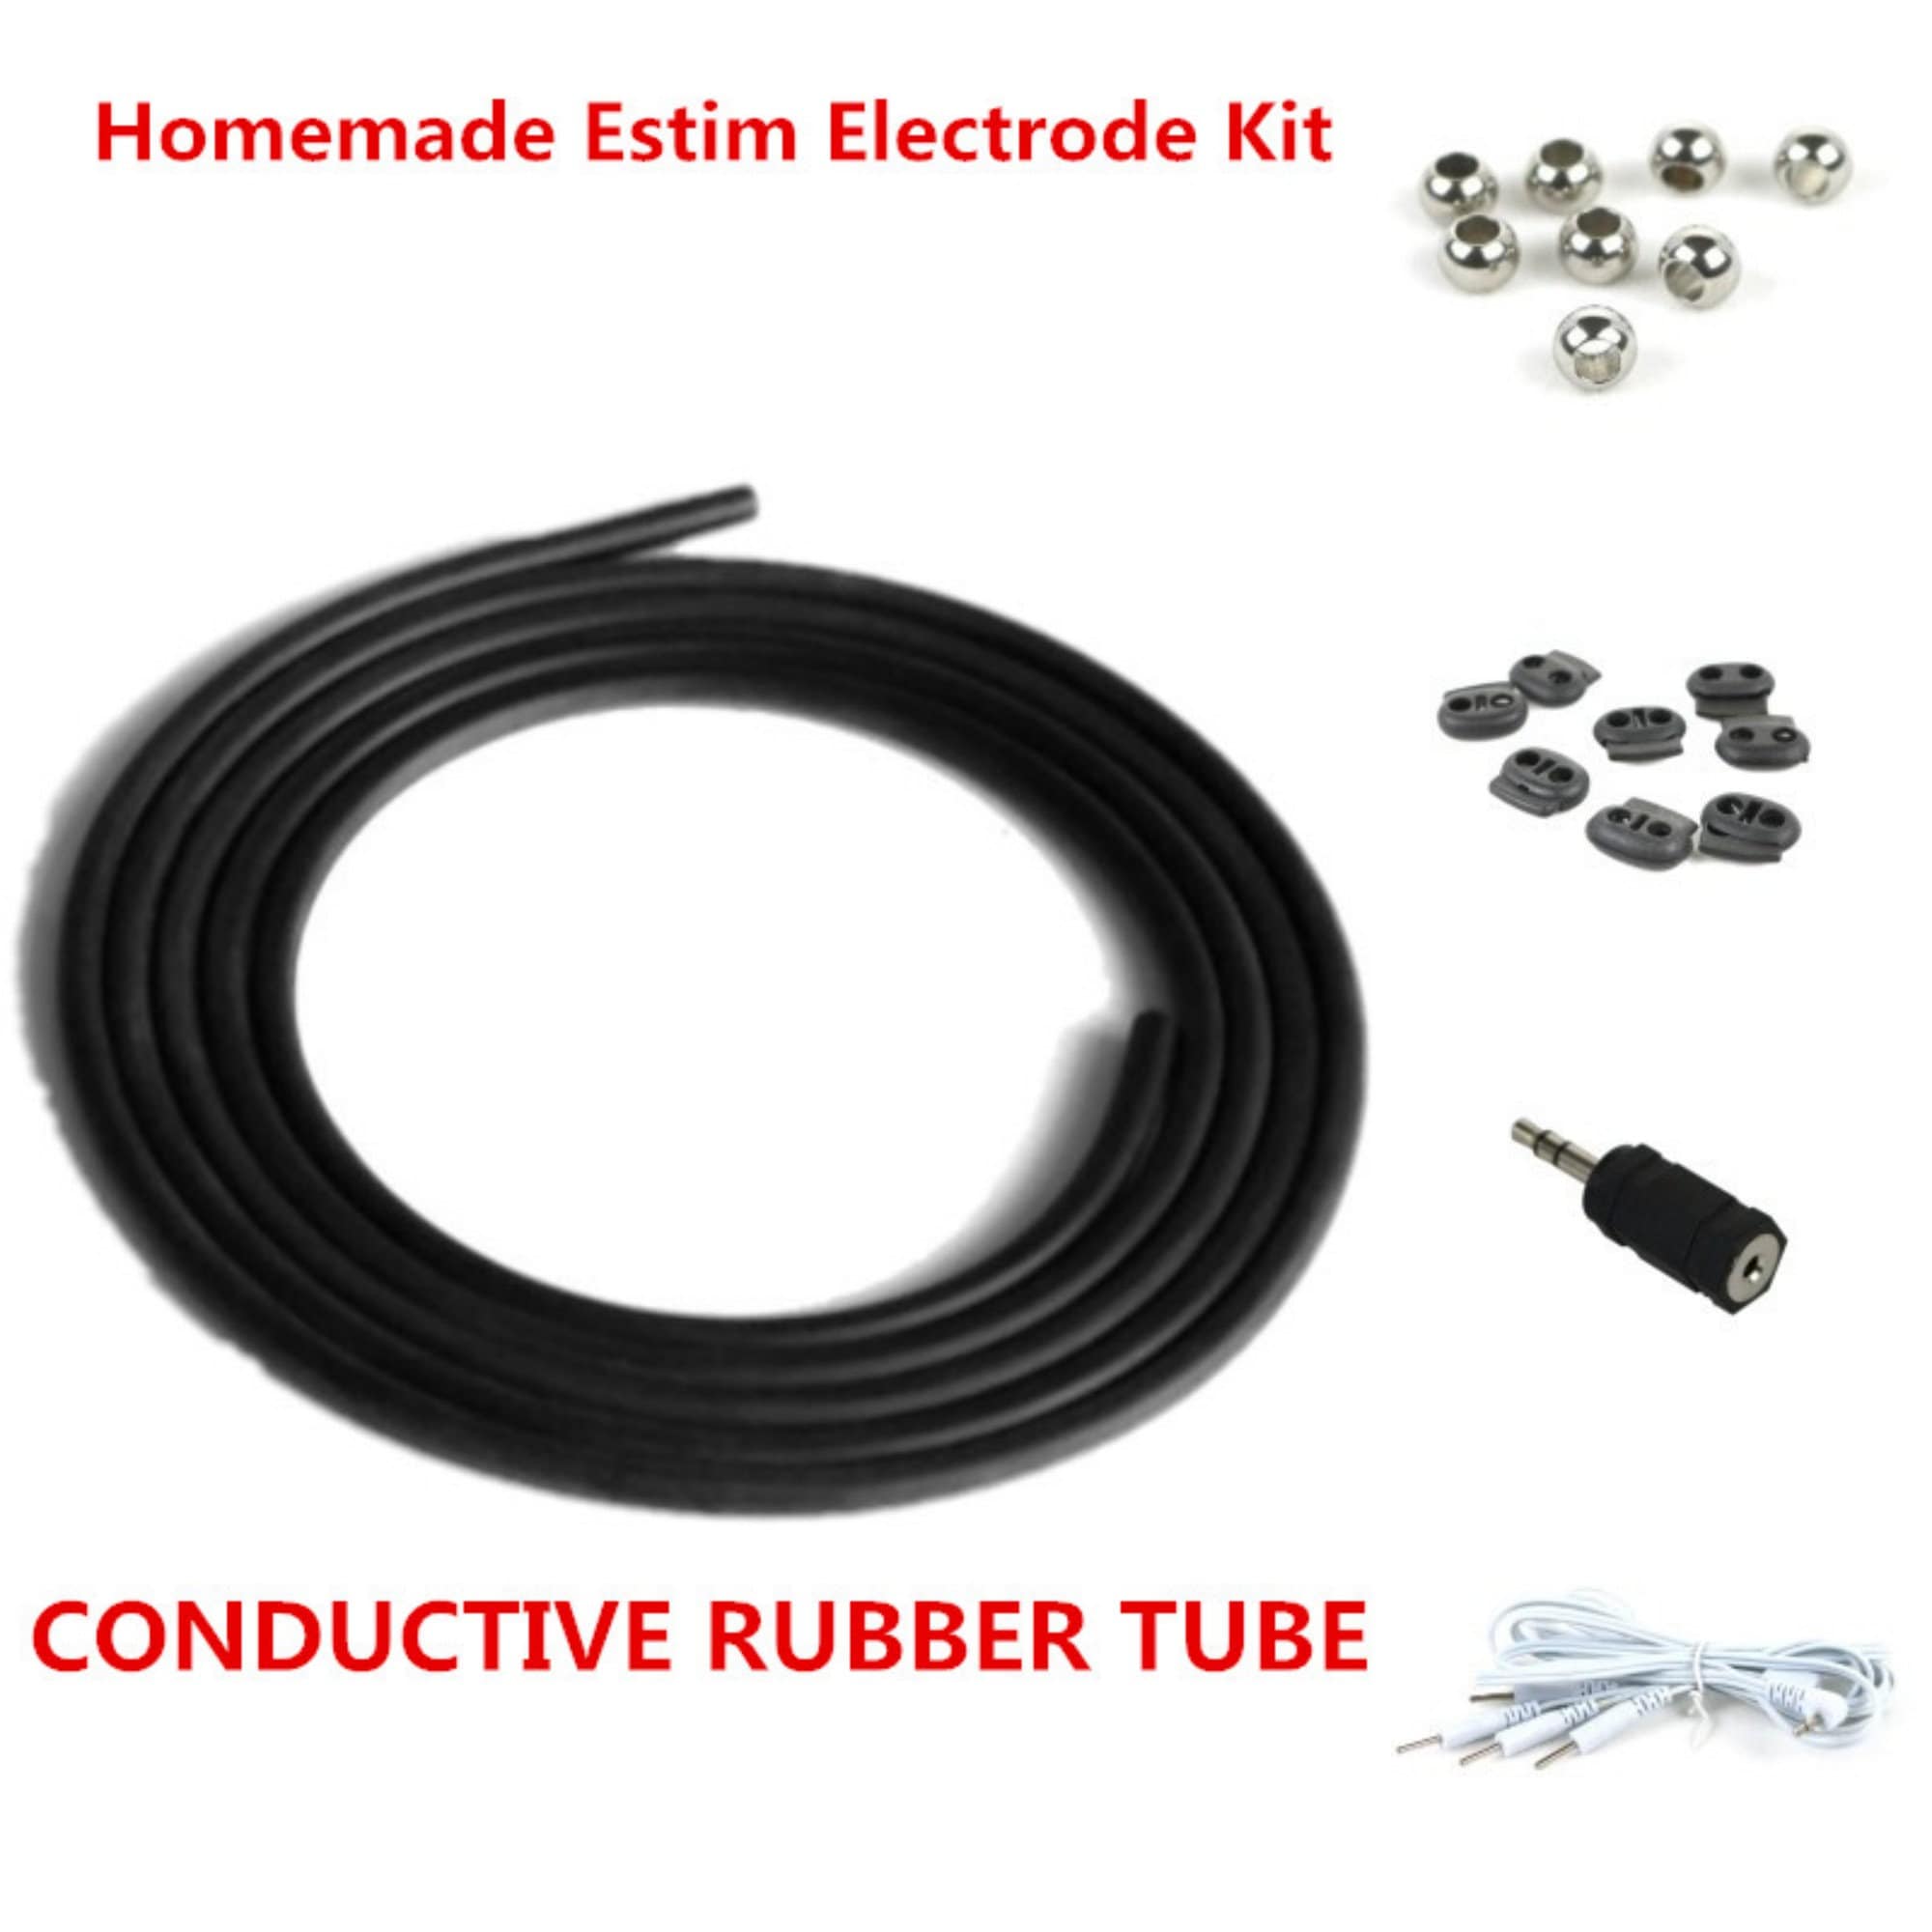 Homemade E-stim DIY Electrodes Conductive Rubber Tube Kit hq nude photo